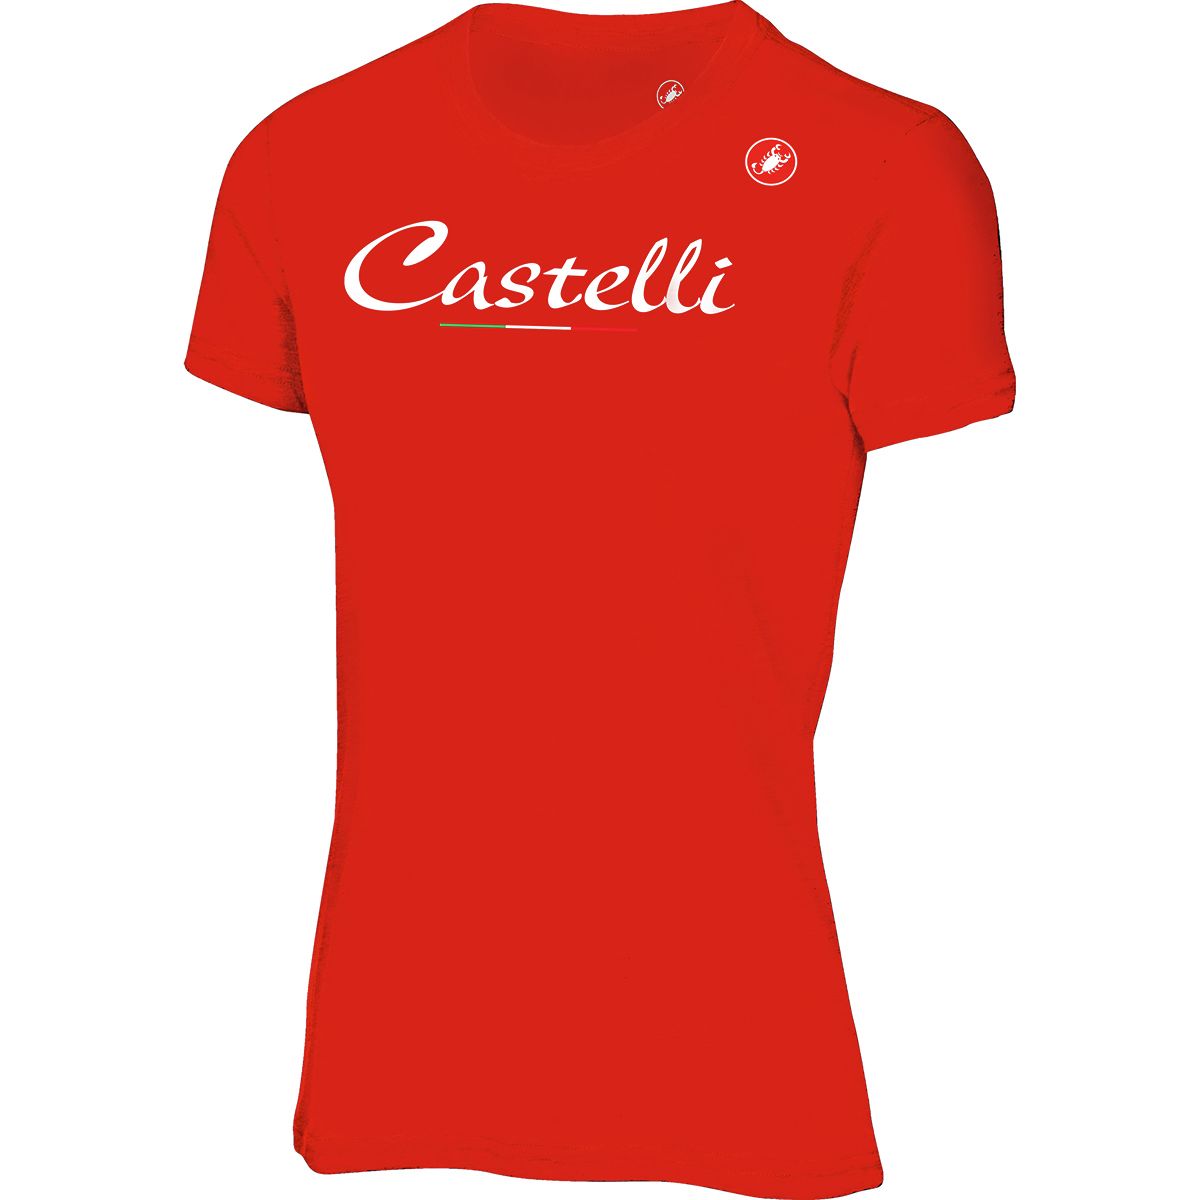 Castelli Classic T-Shirt - Women's